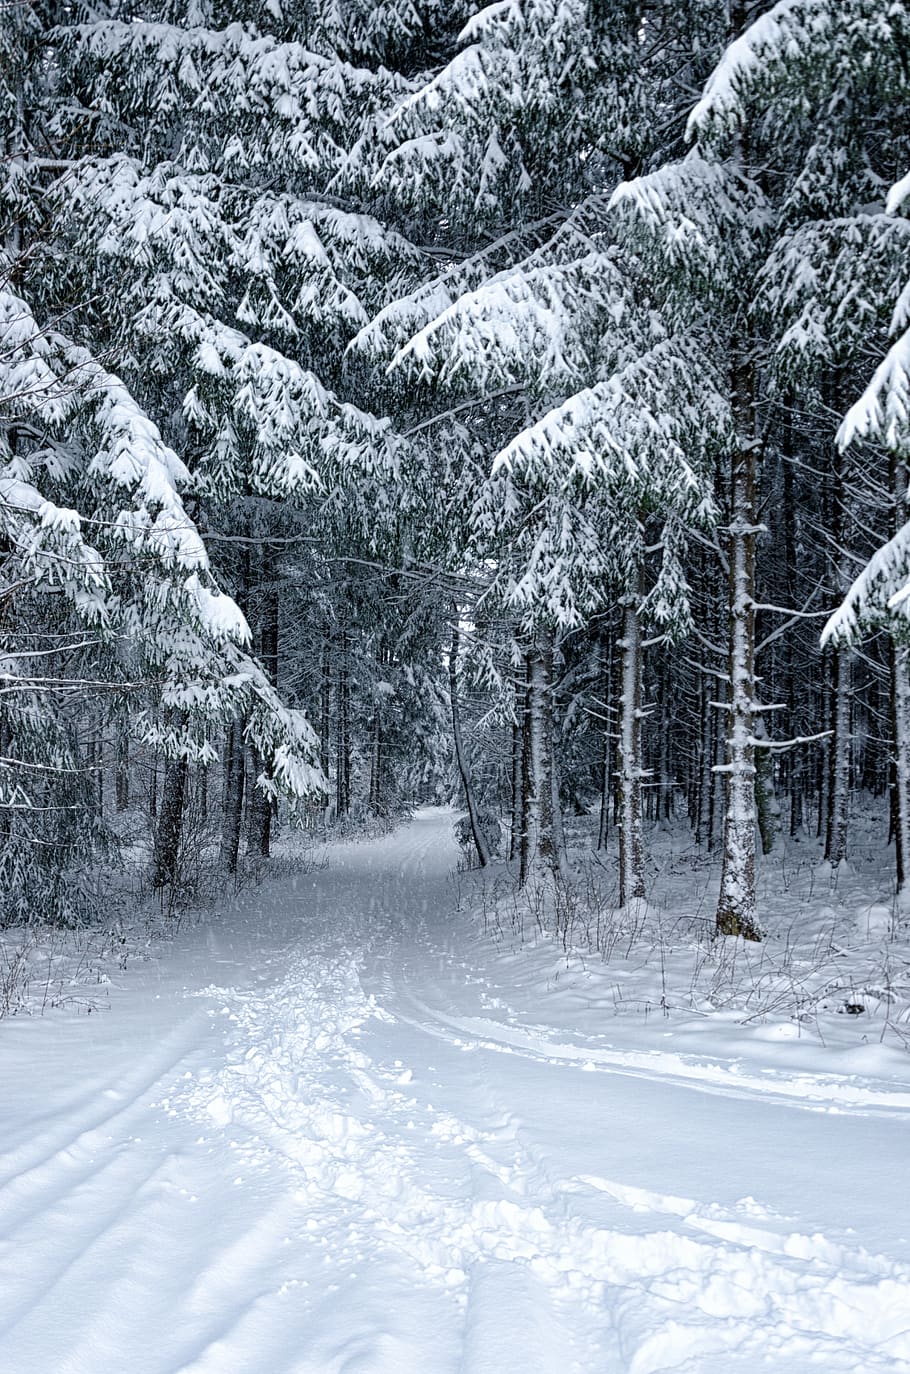 salju, musim dingin, dingin, embun beku, beku, pemandangan, pohon, kayu, badai salju, alam